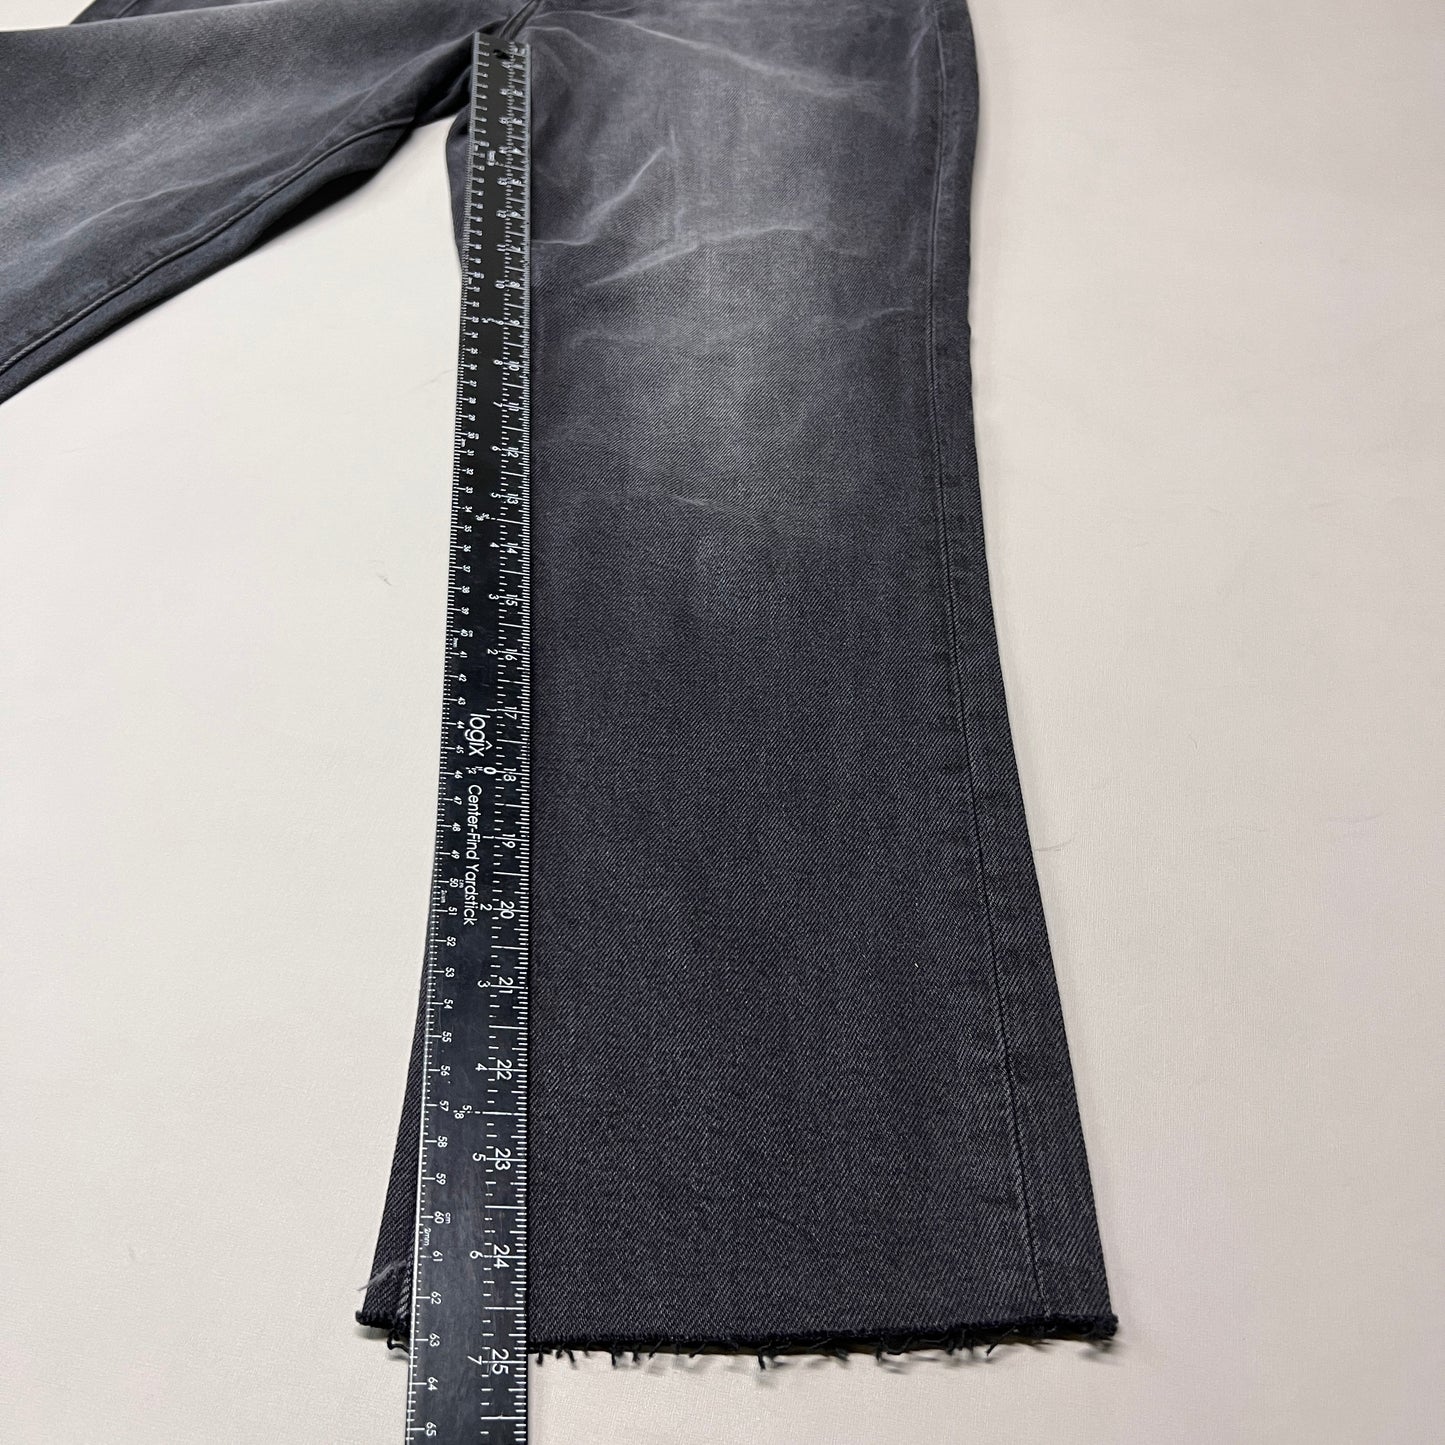 ARTICLES OF SOCIETY Kate Eleele Raw Hem Cropped Jeans Women's Sz 26 Black 4810TQB-720 (New)